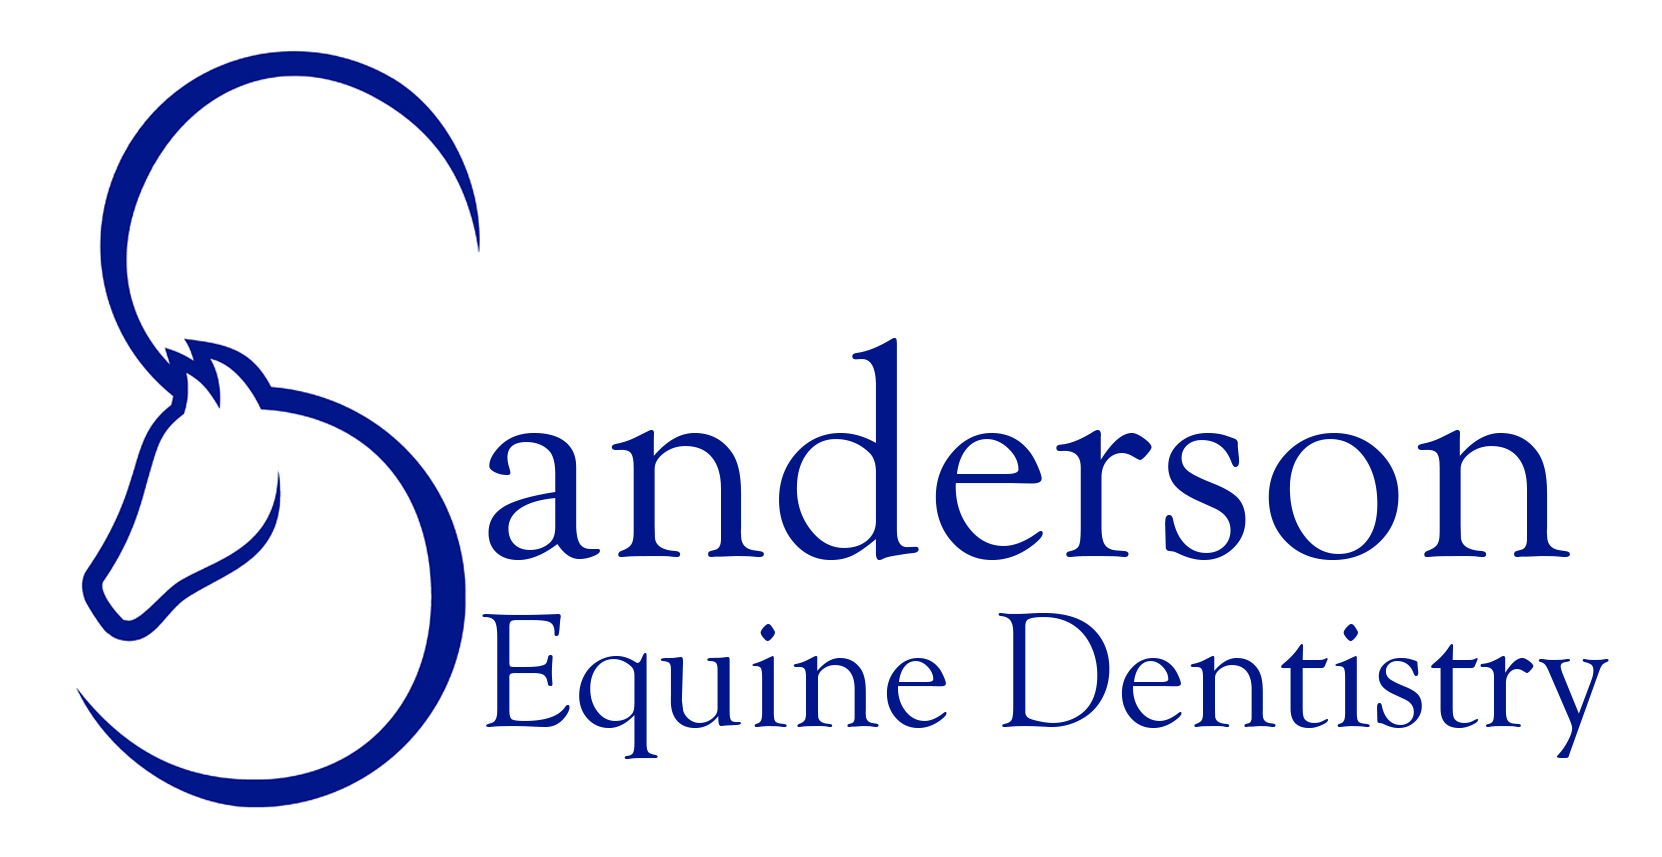 Sanderson Equine Dentistry